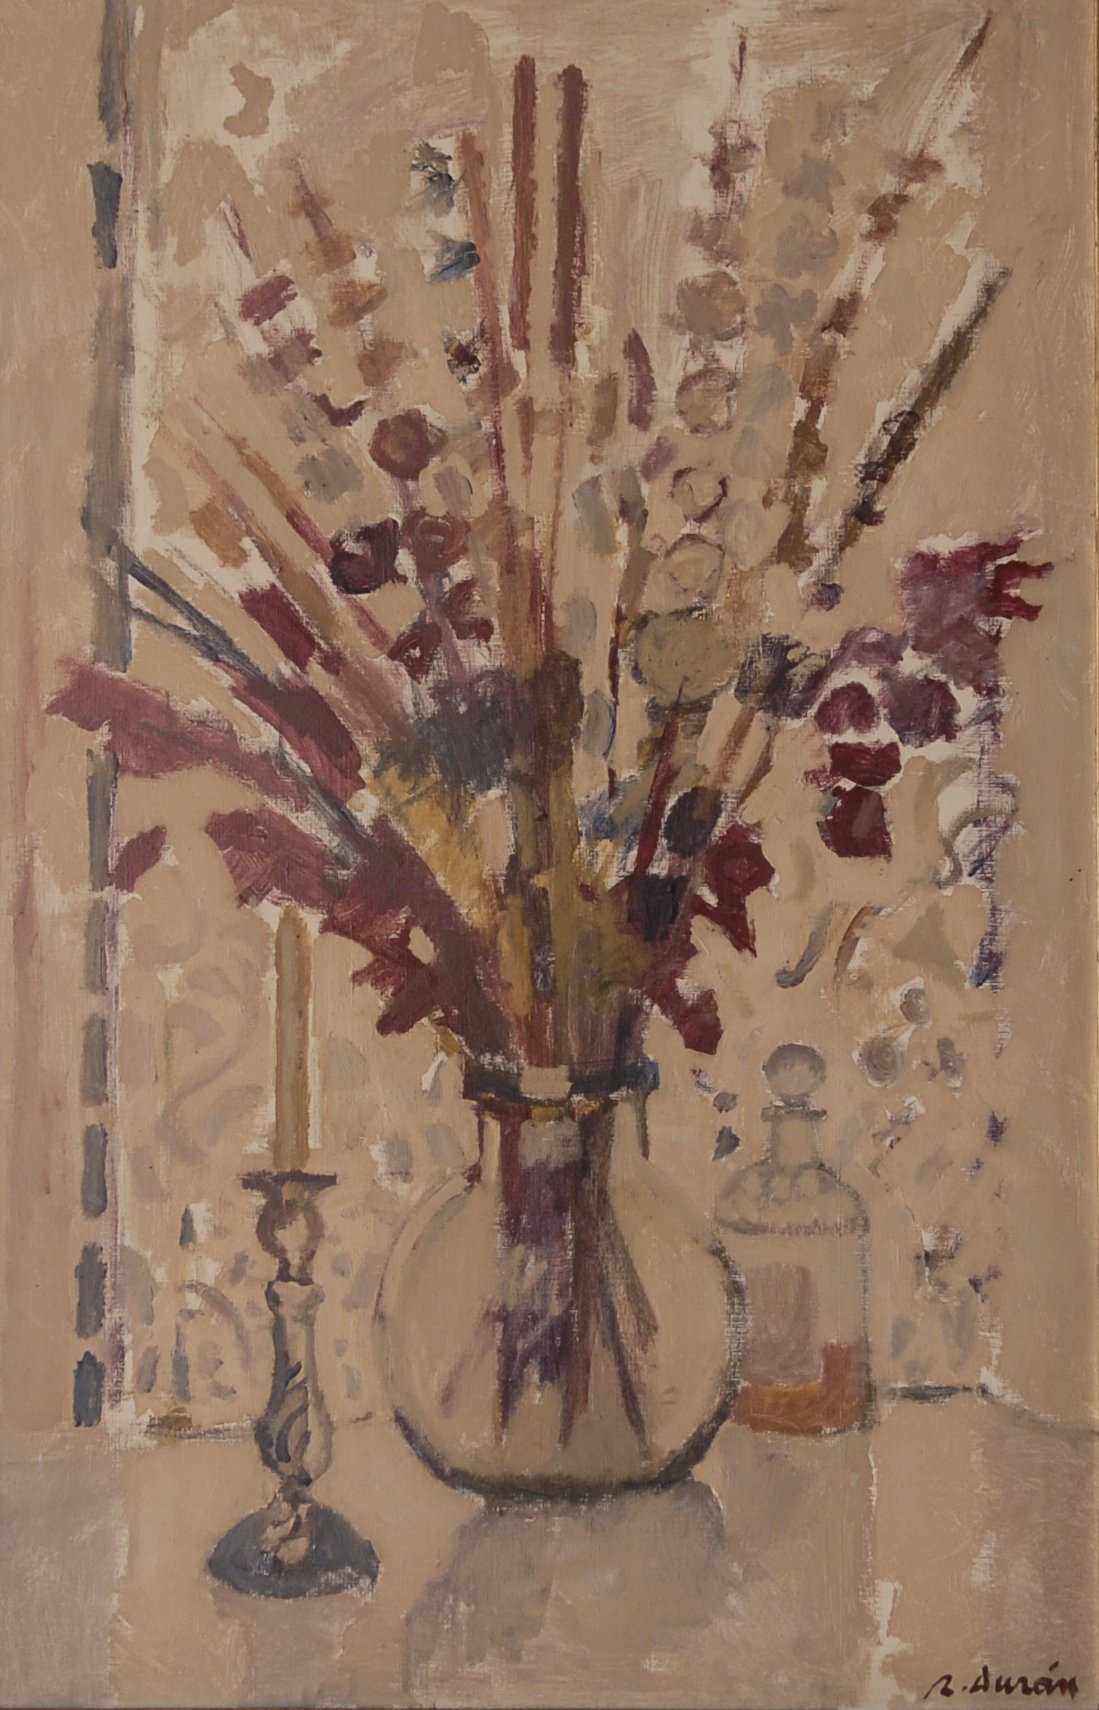 Flowers In A Vase by Rafael Duran